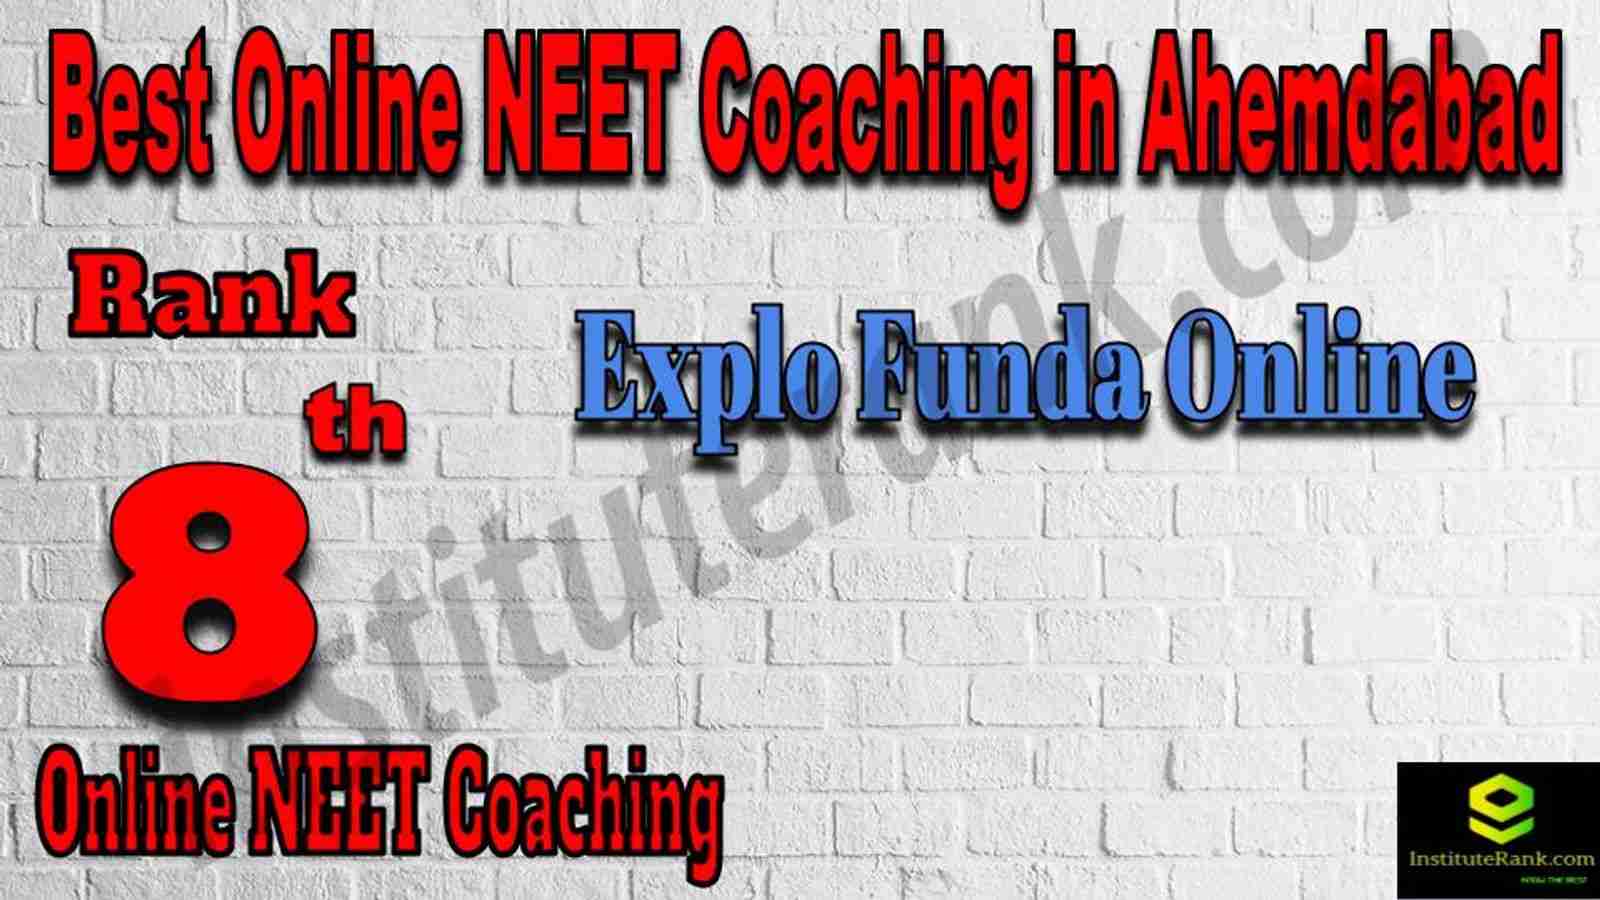 Rank 8 Best Online NEET Coaching in Ahmedabad